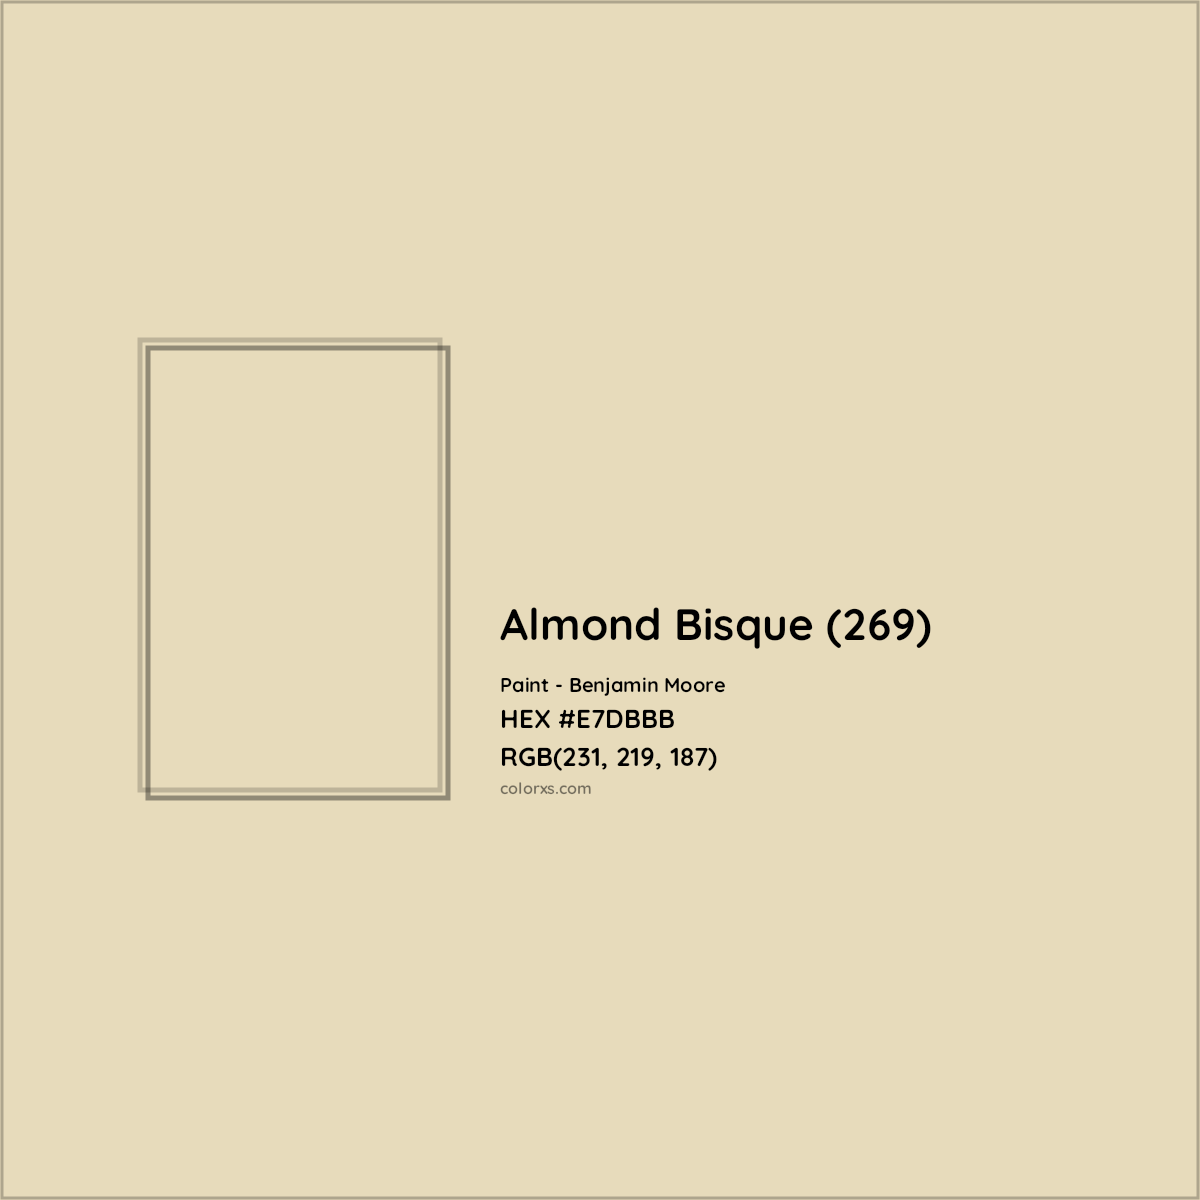 HEX #E7DBBB Almond Bisque (269) Paint Benjamin Moore - Color Code